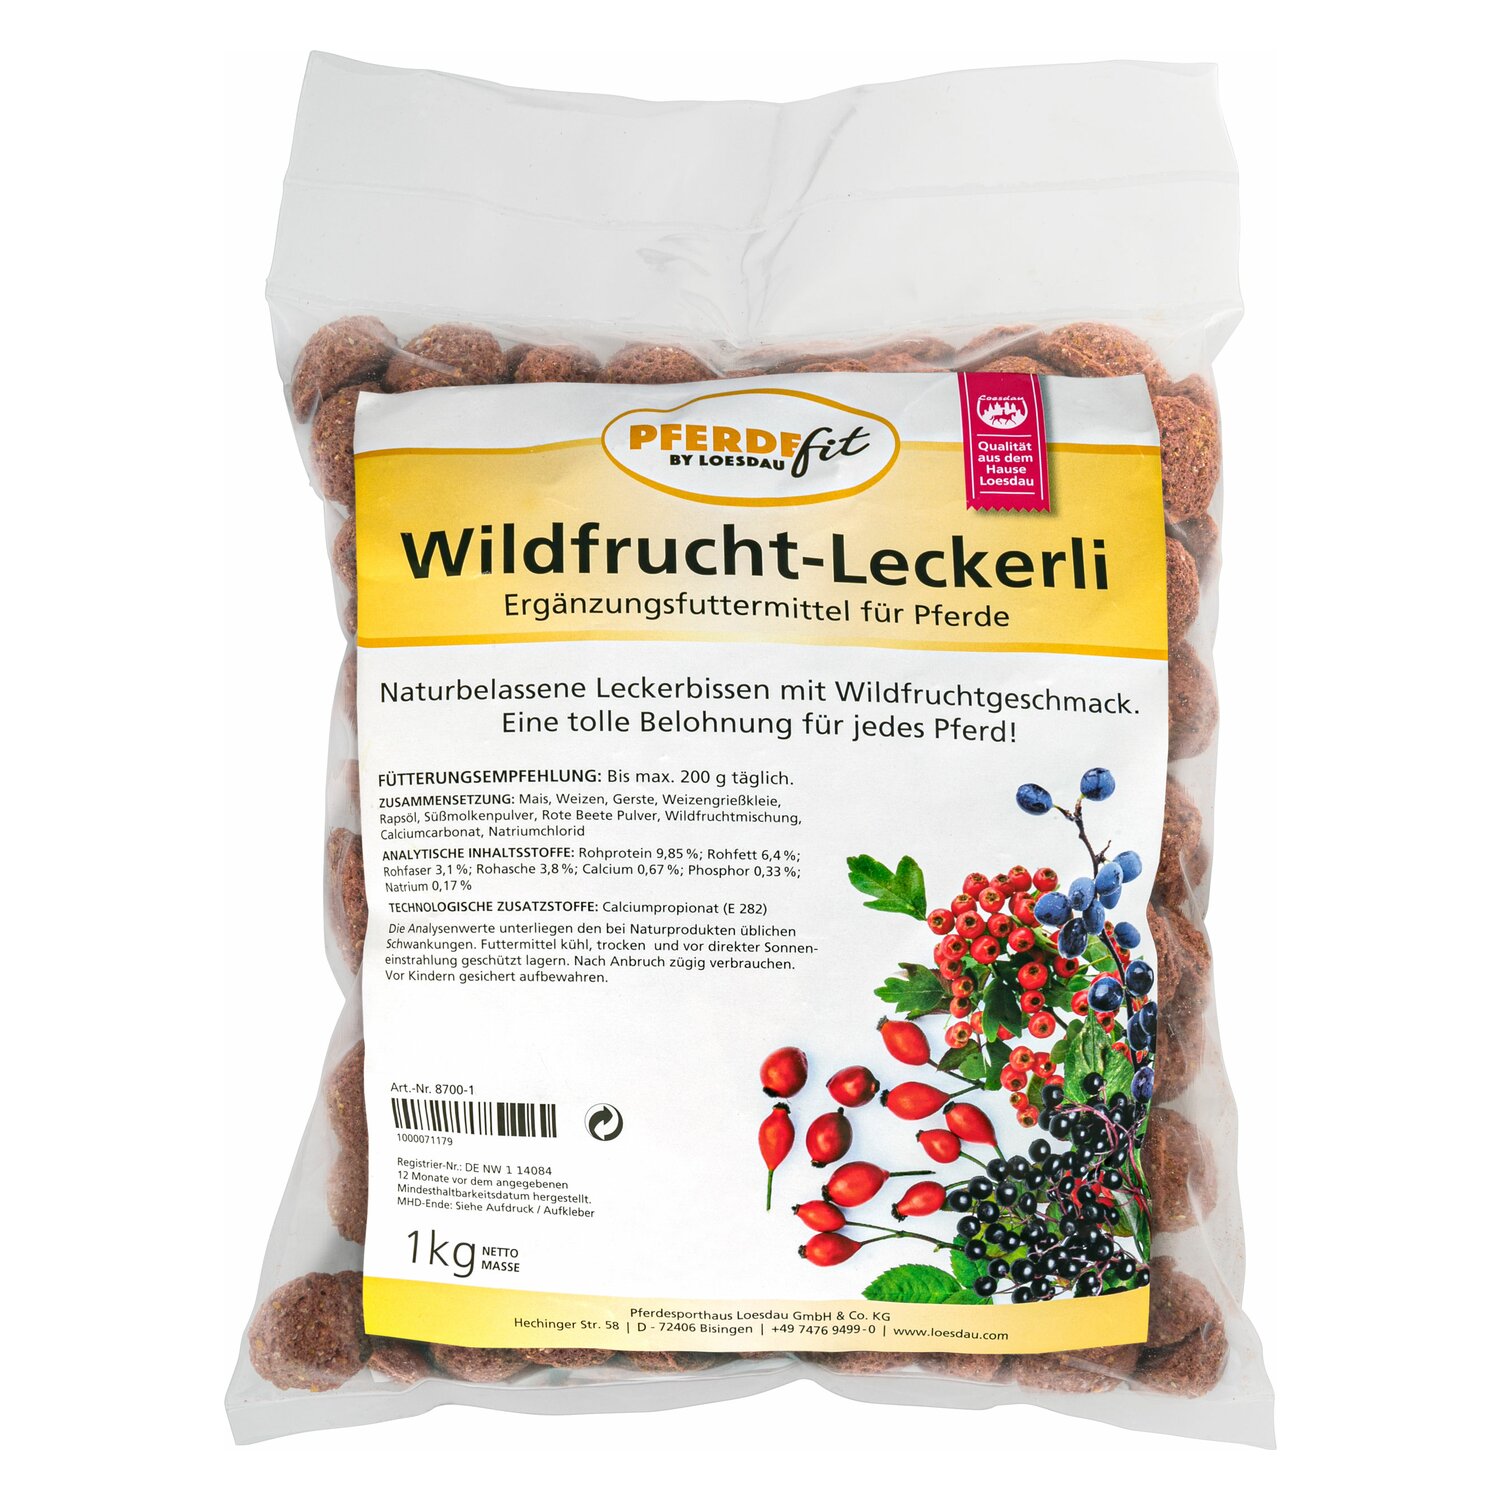 PFERDEfit by Loesdau Wildfrucht-Leckerli 1 kg